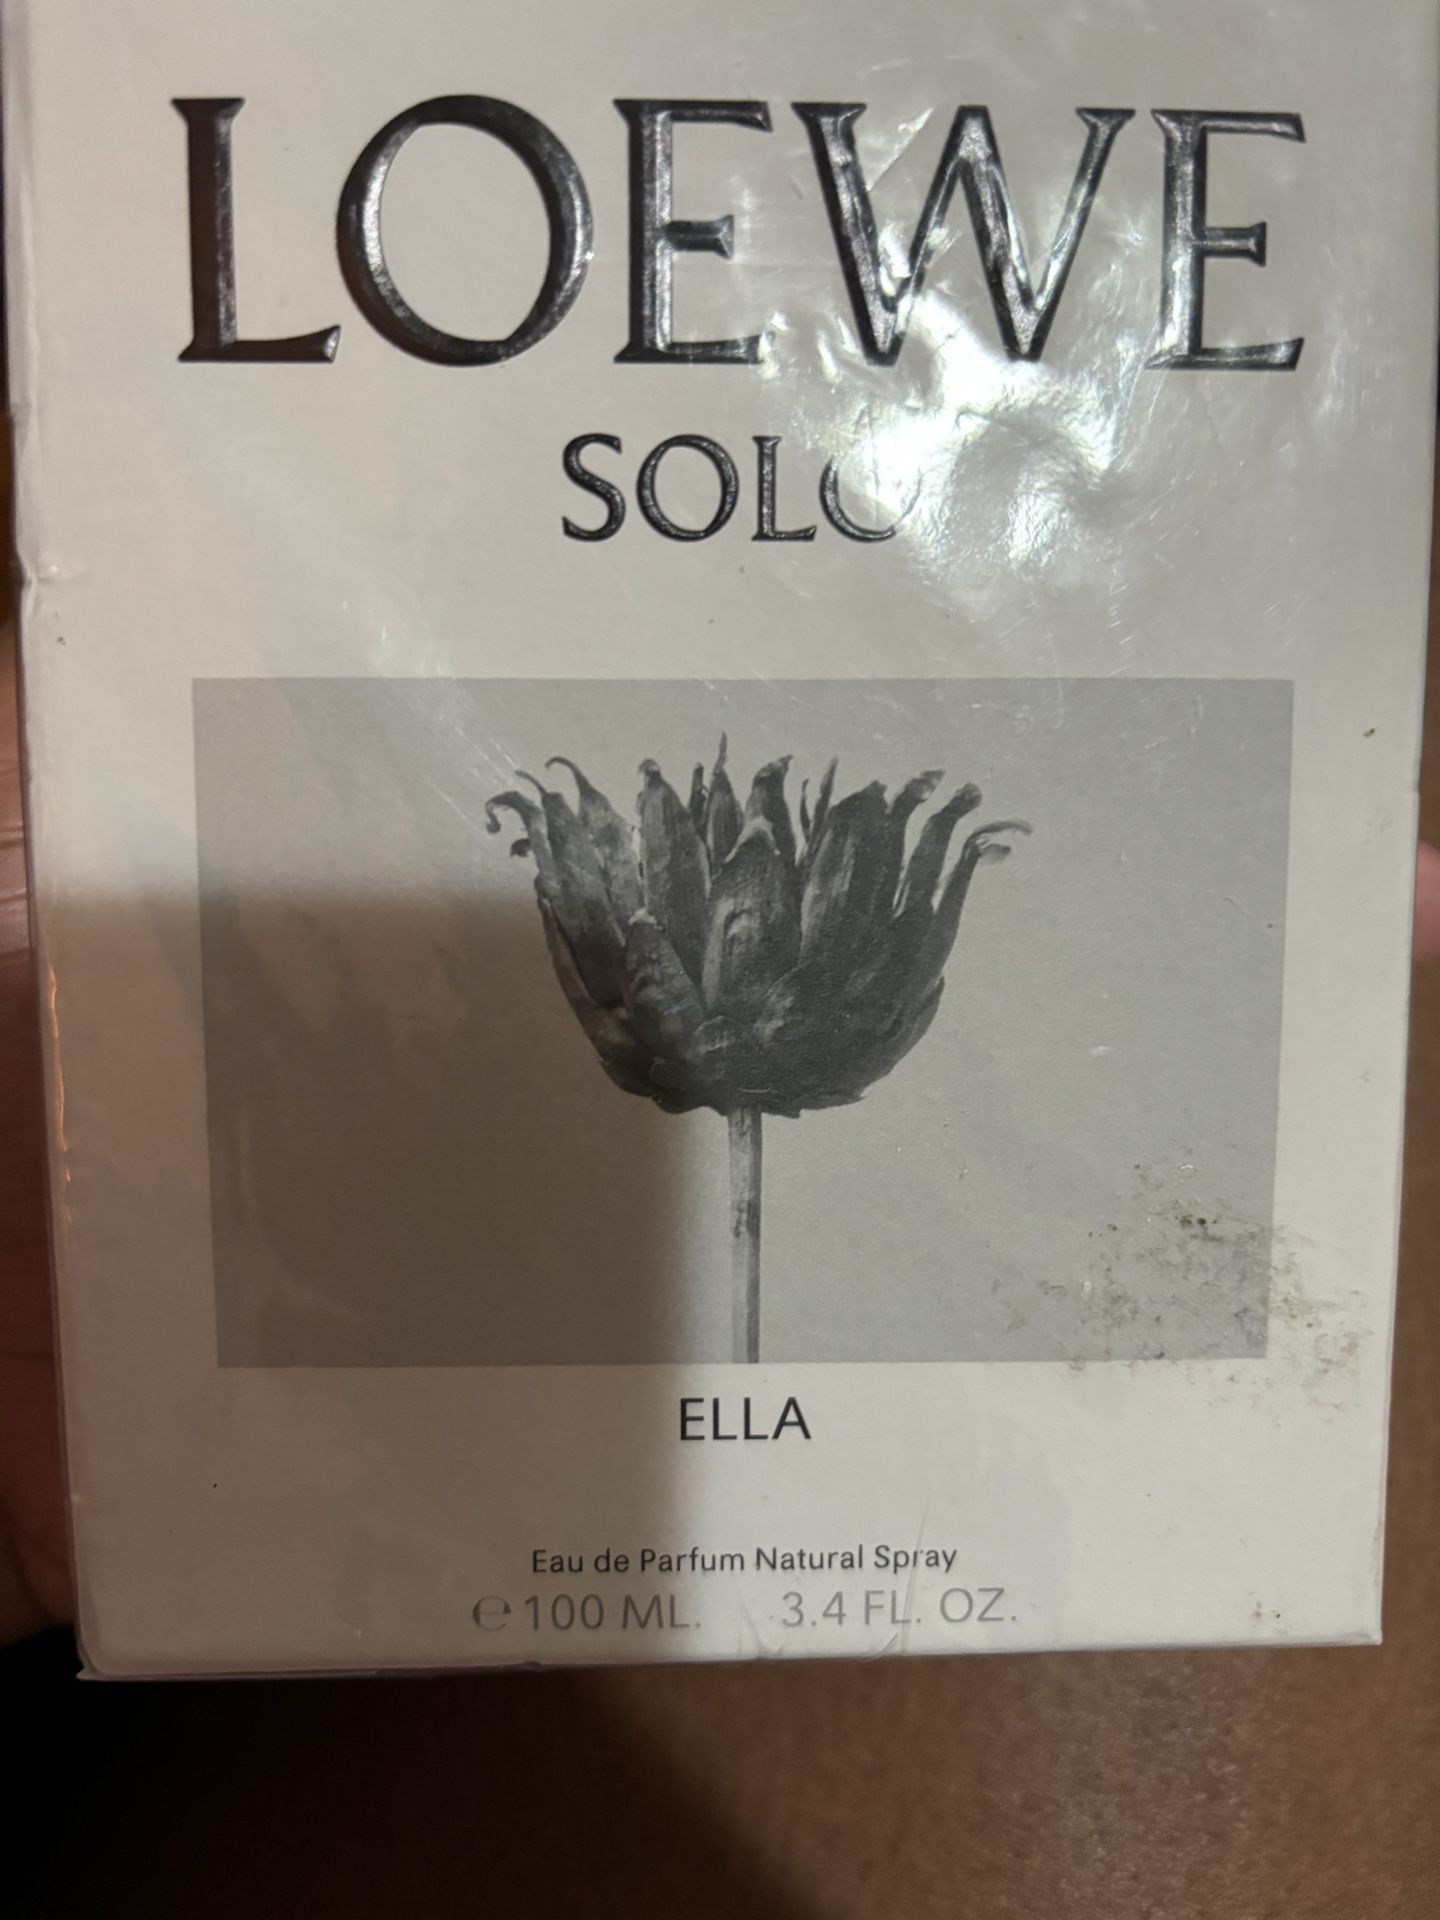 Loewe Scent $65